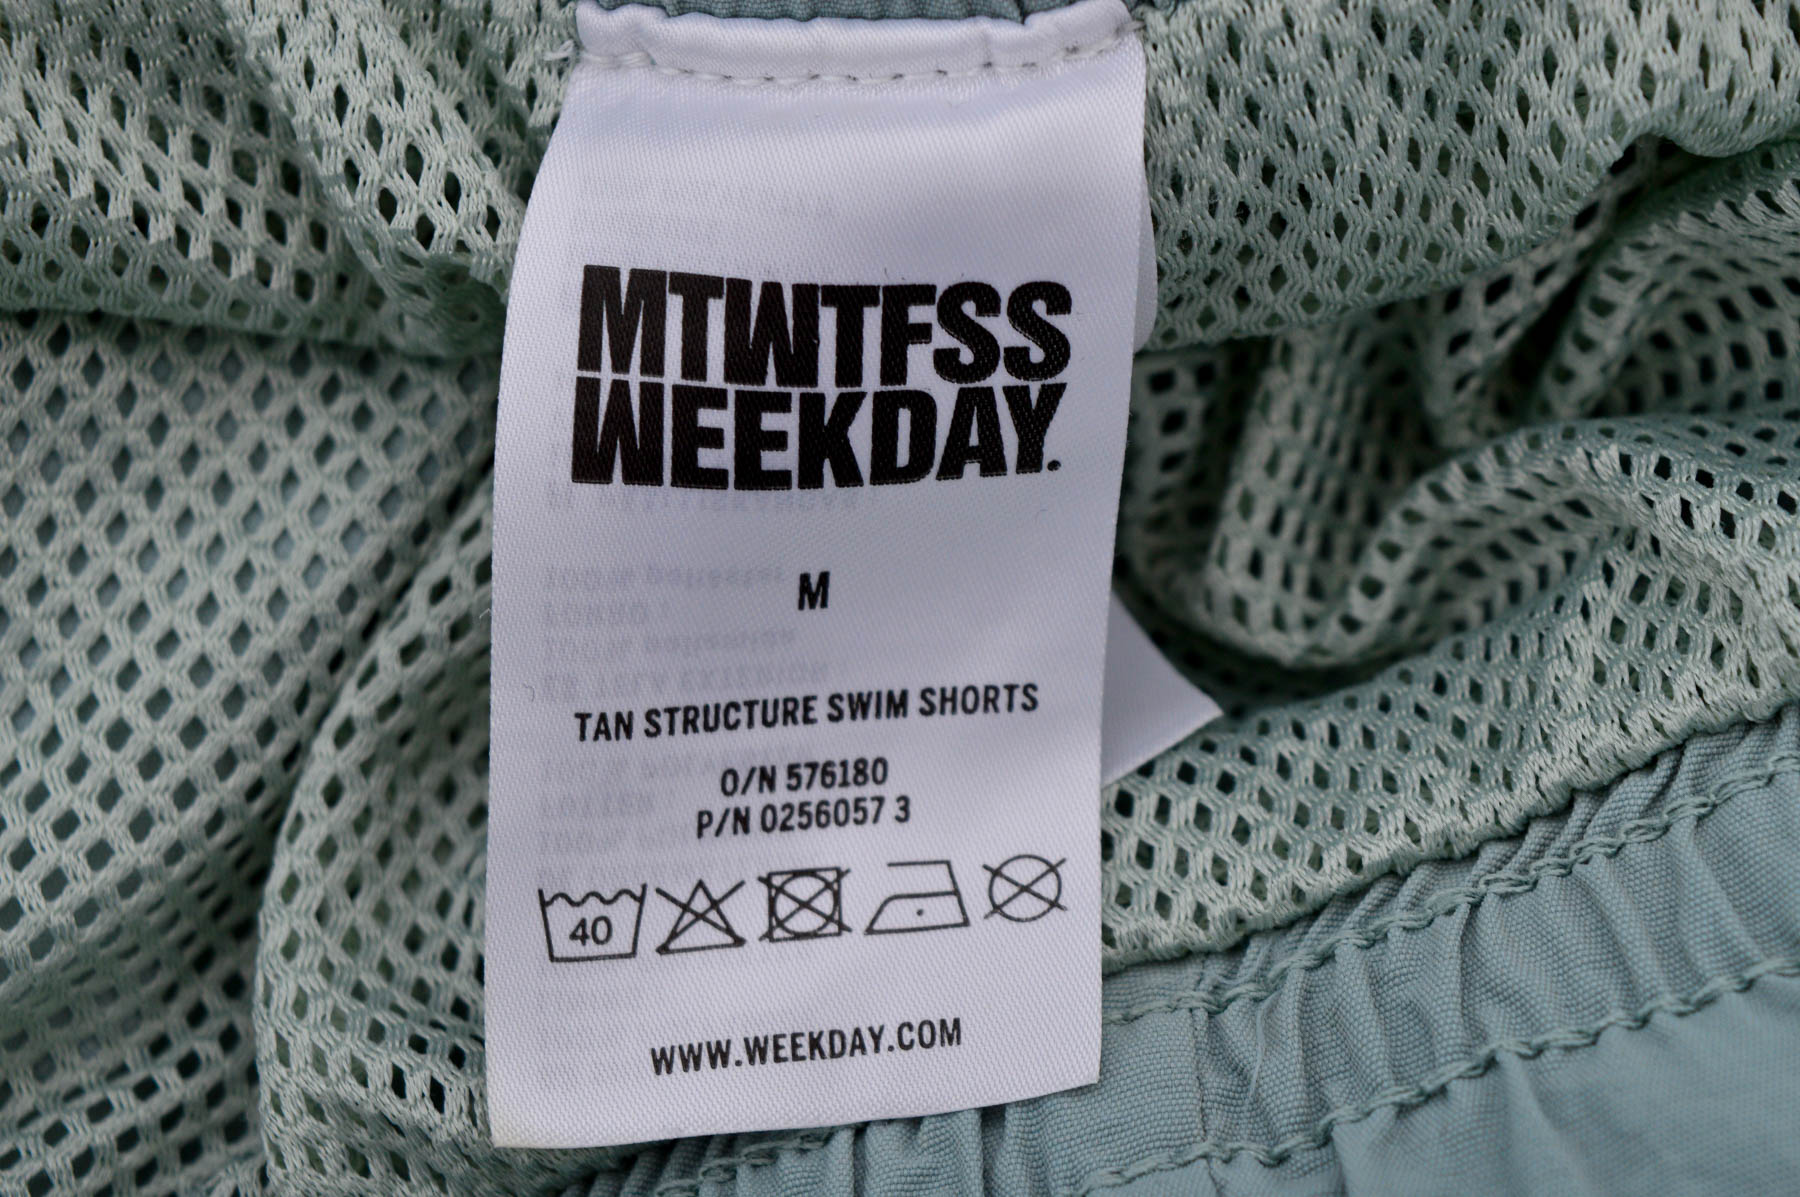 Women's shorts - MTWTFSS WEEKDAY - 2